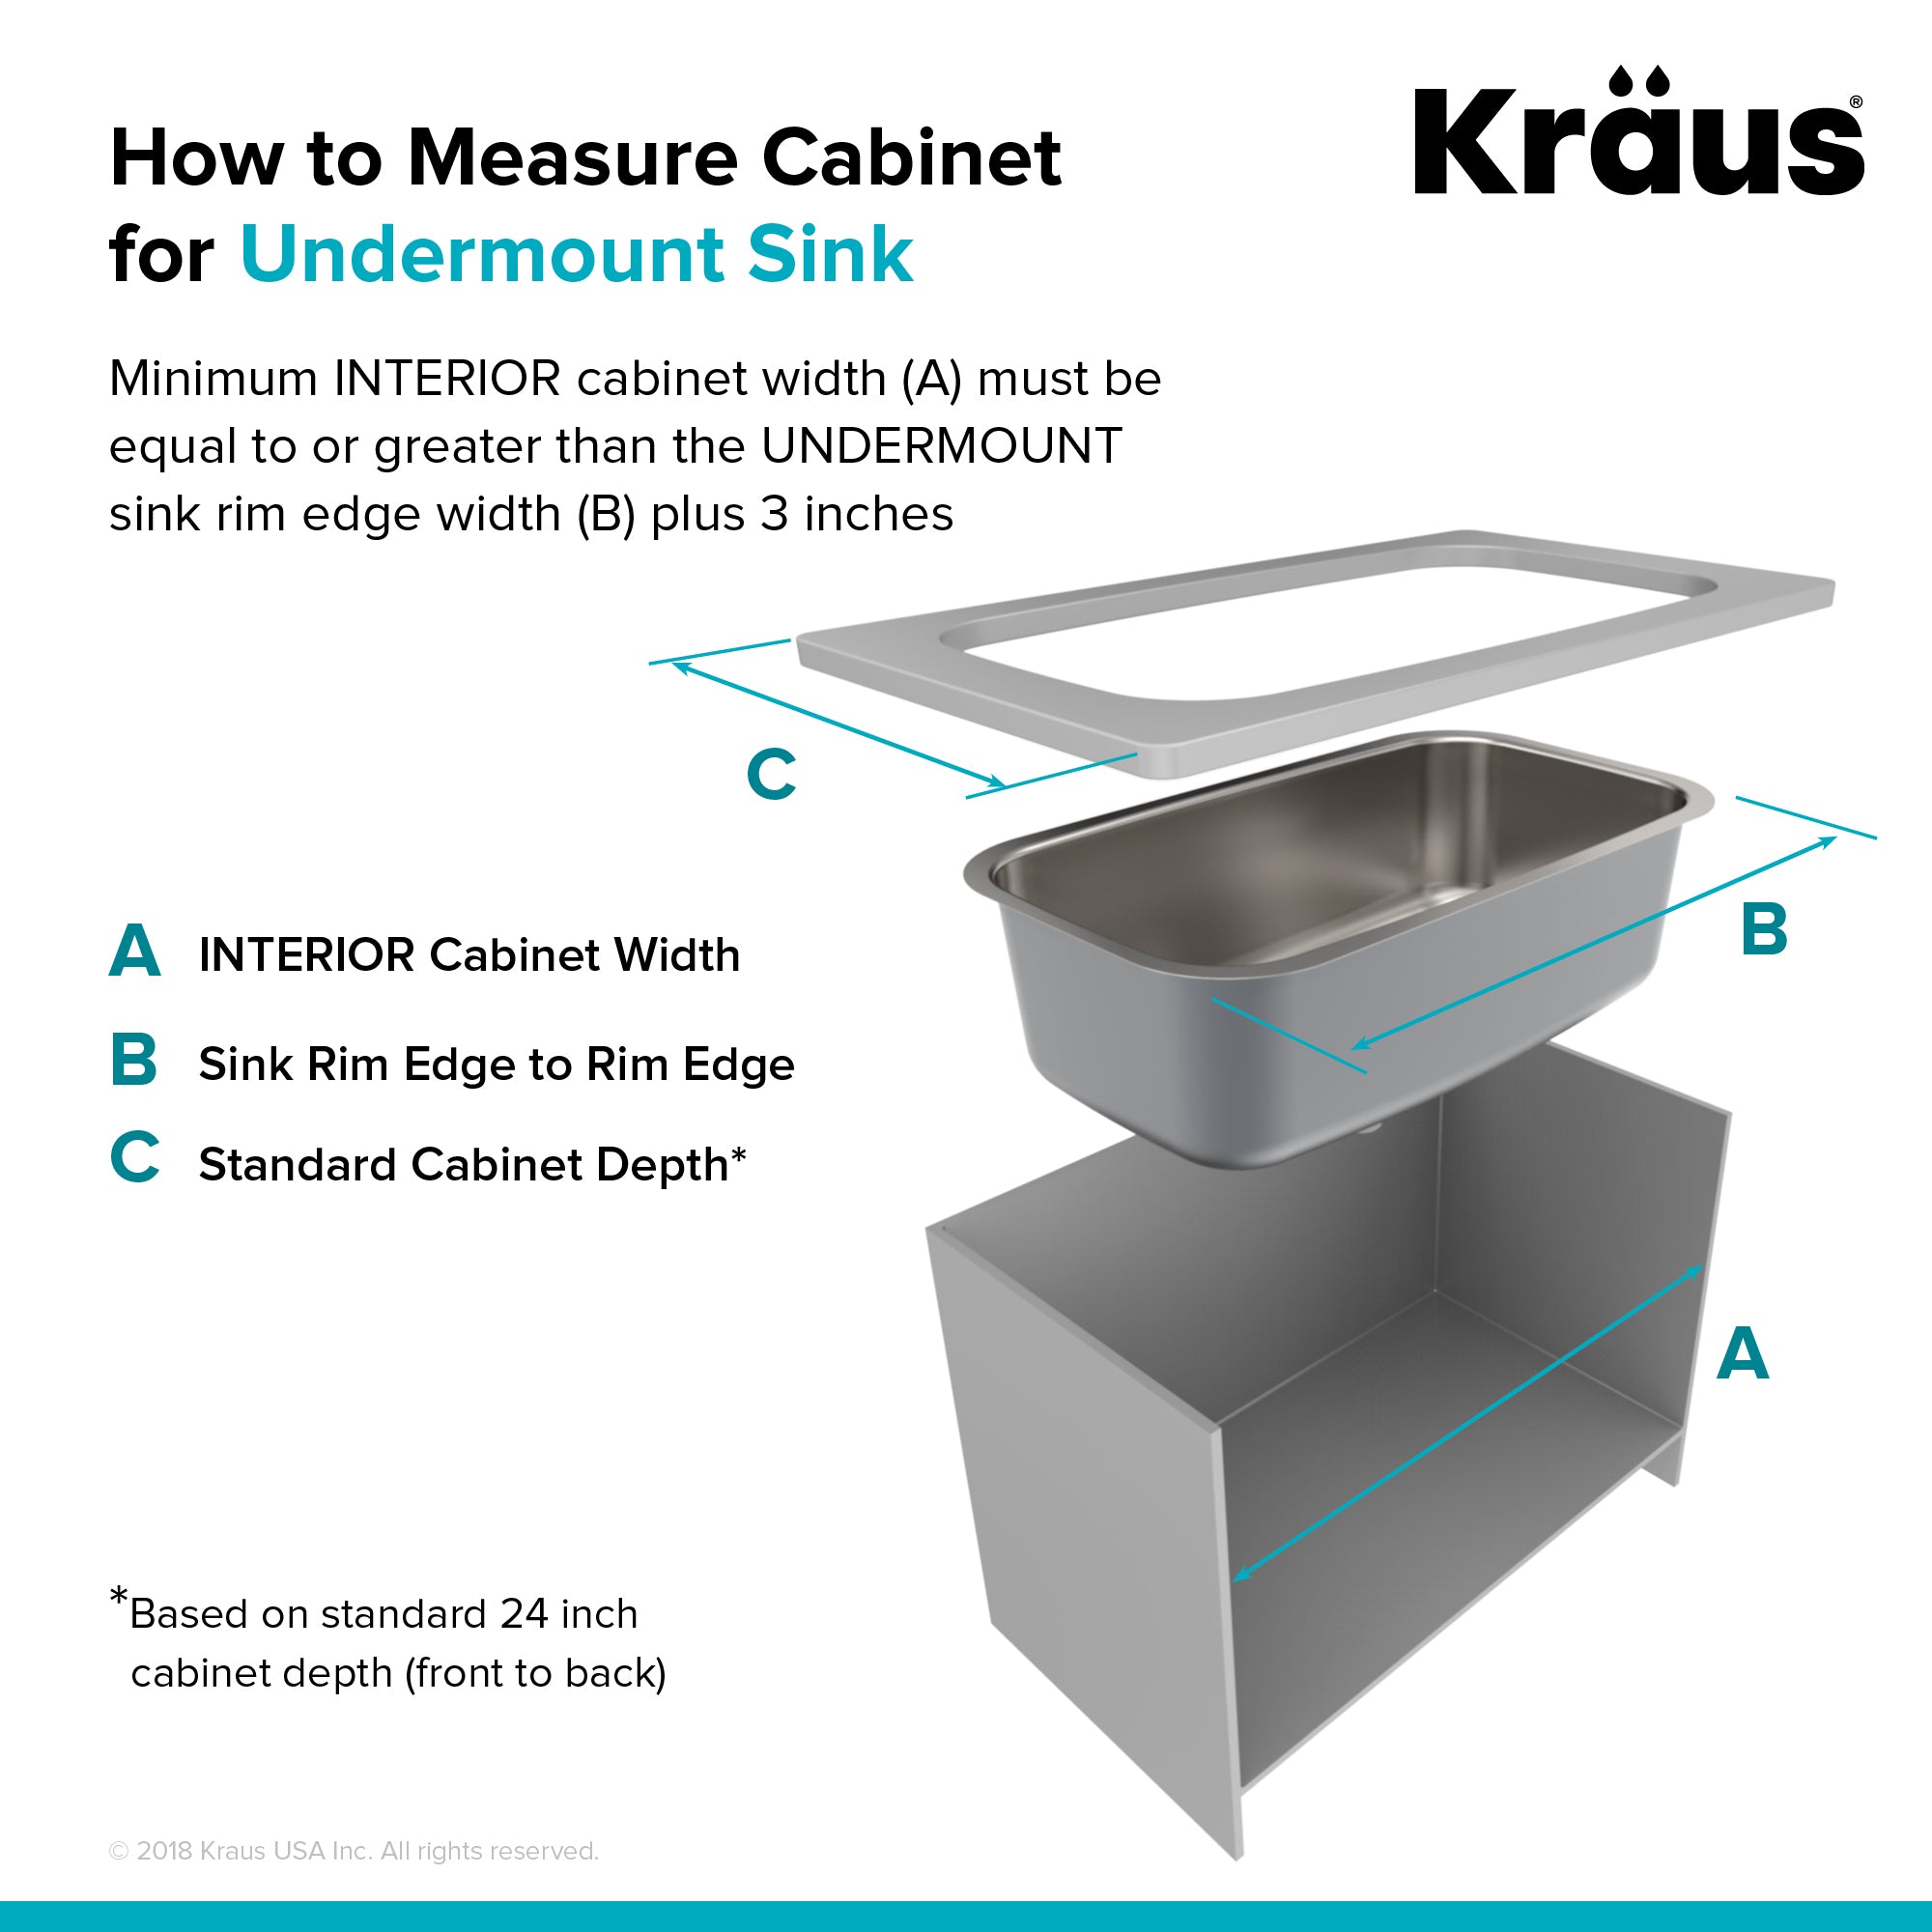 Kraus Outlast MicroShield 31.5 Scratch-Resist Single Bowl Stainless Steel Undermount Kitchen Sink KBU14E